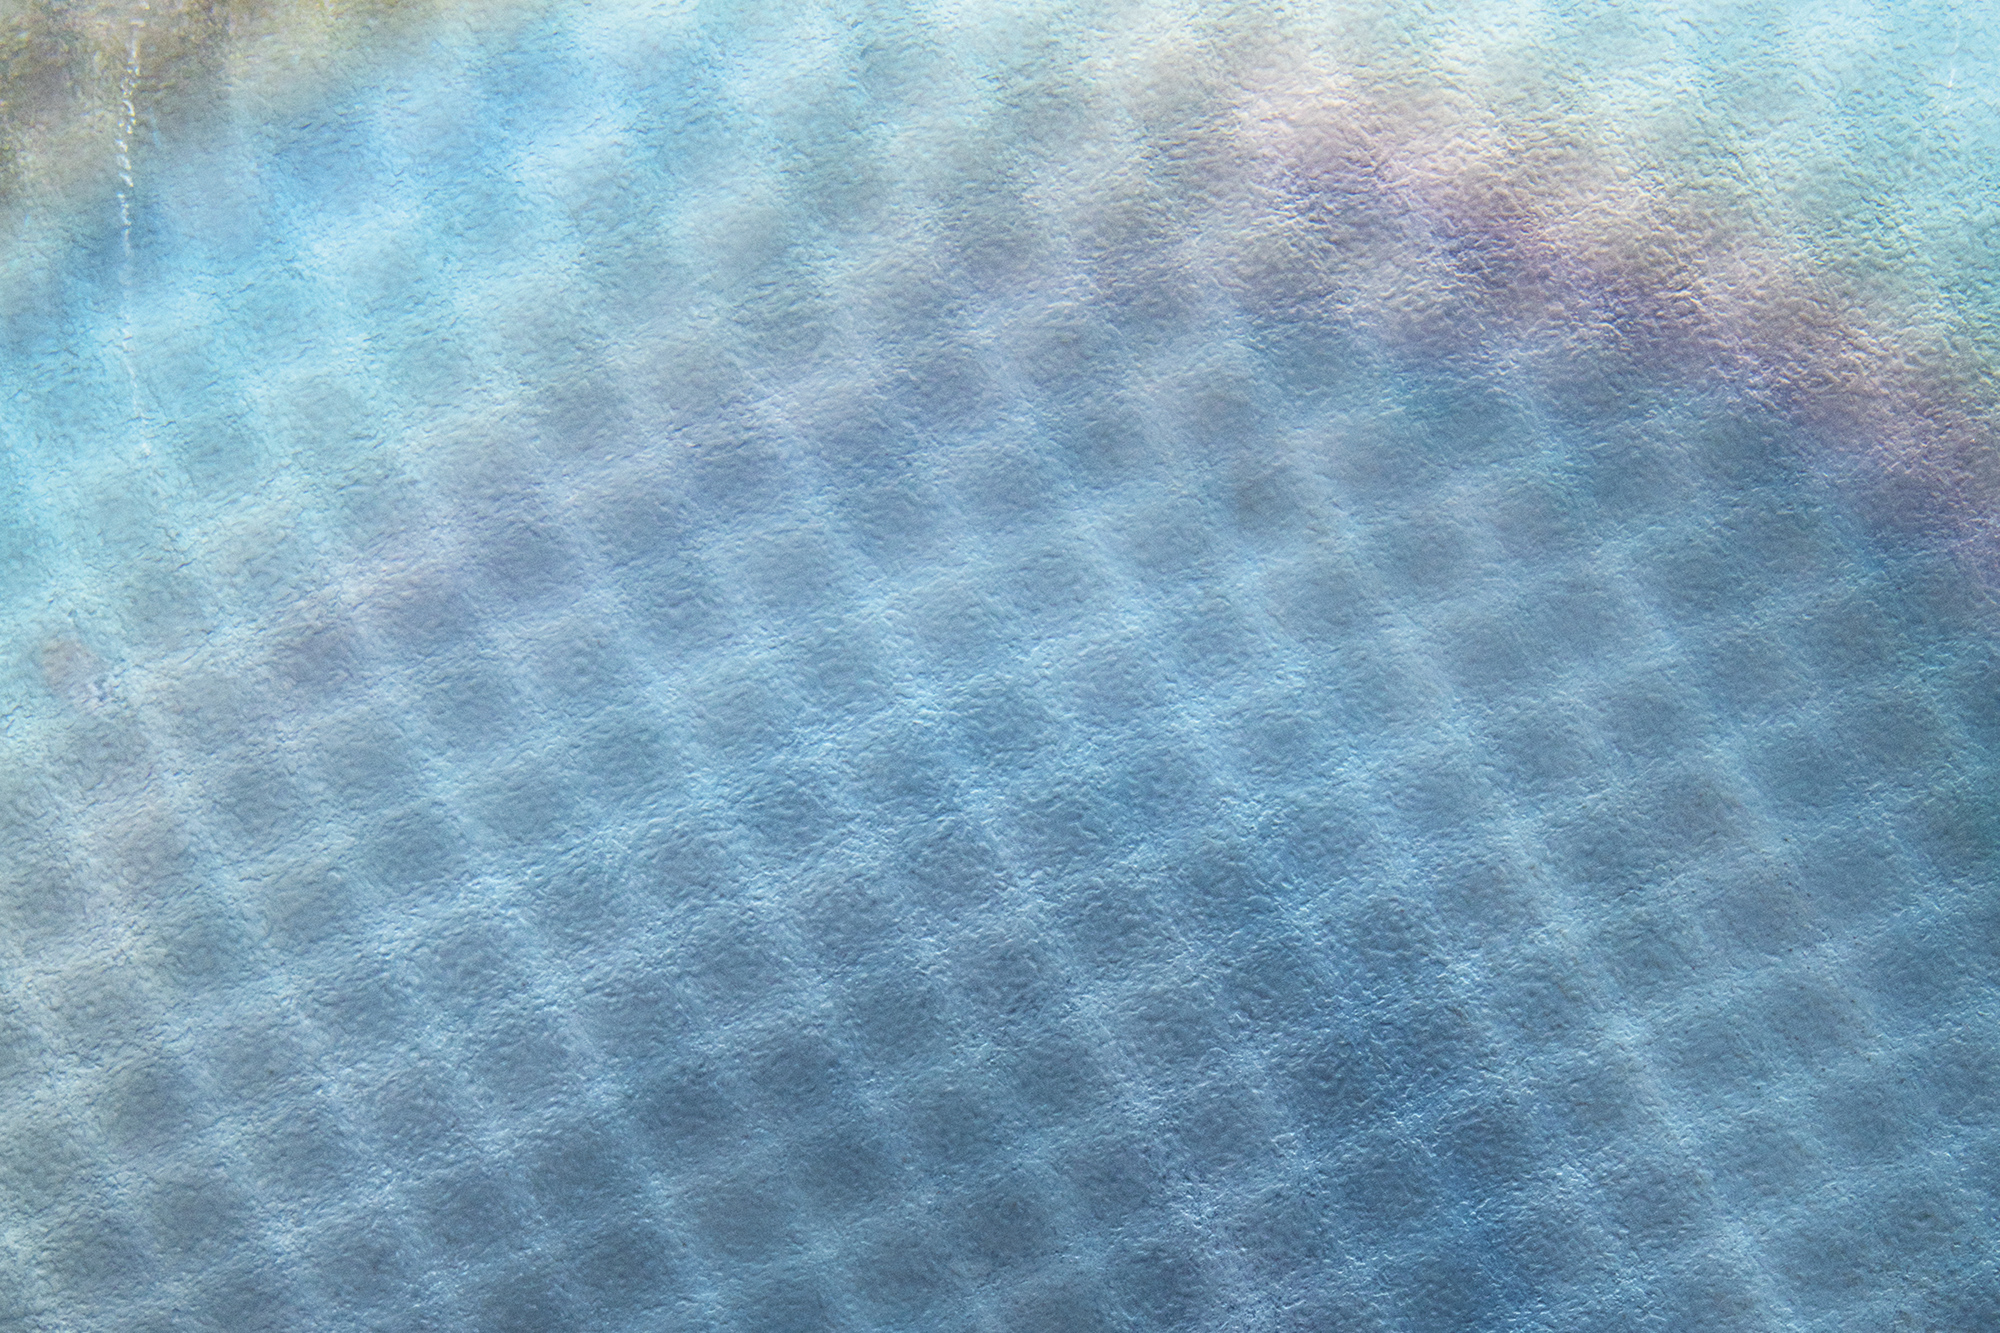 A light blue net pattern.